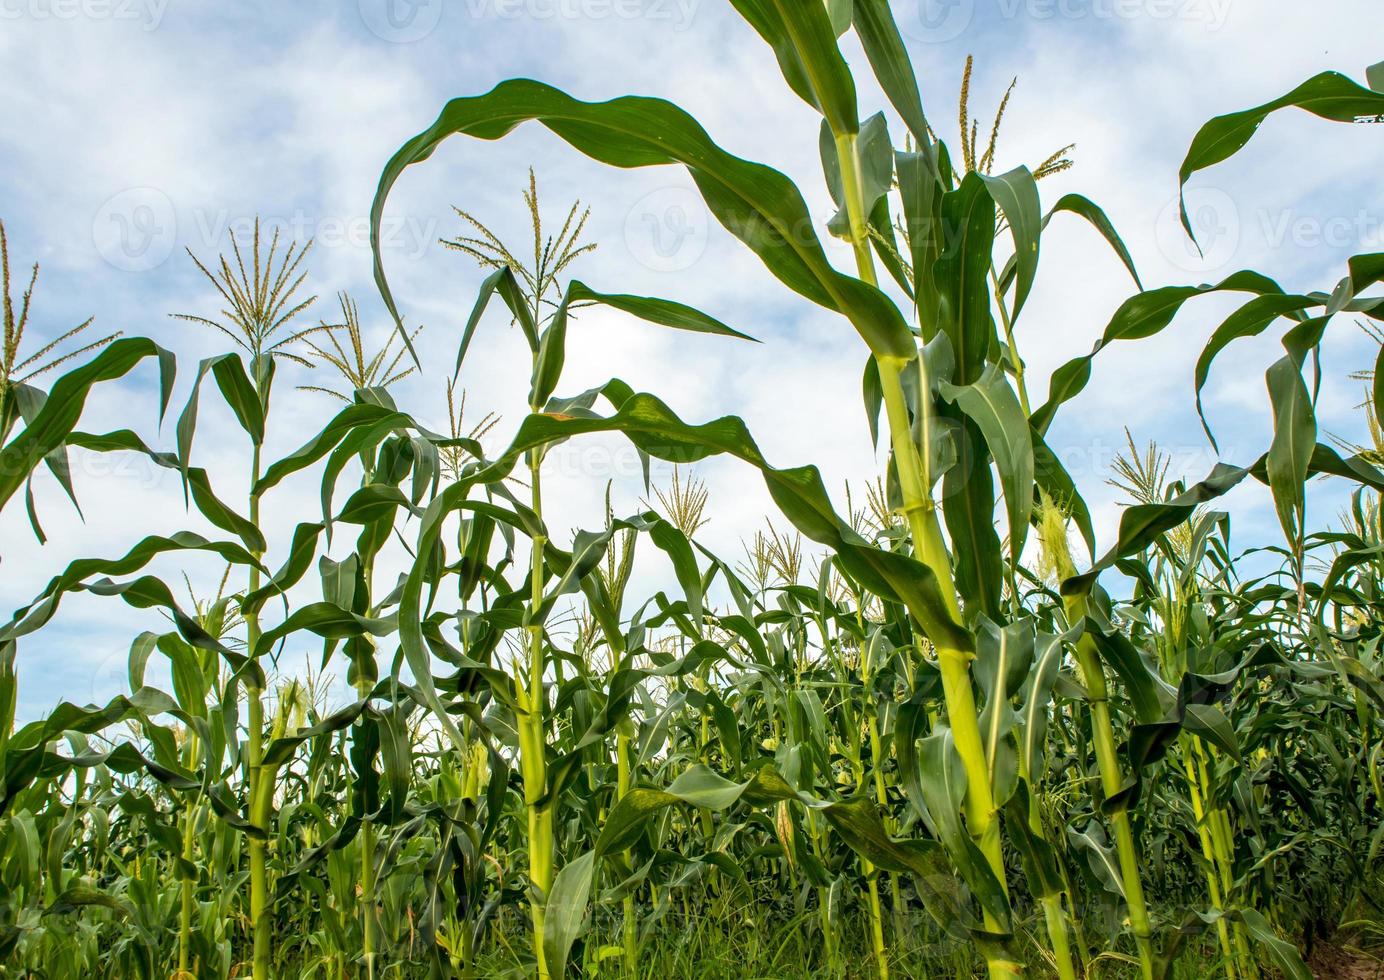 baby corn in fattoria di mais in campagna foto